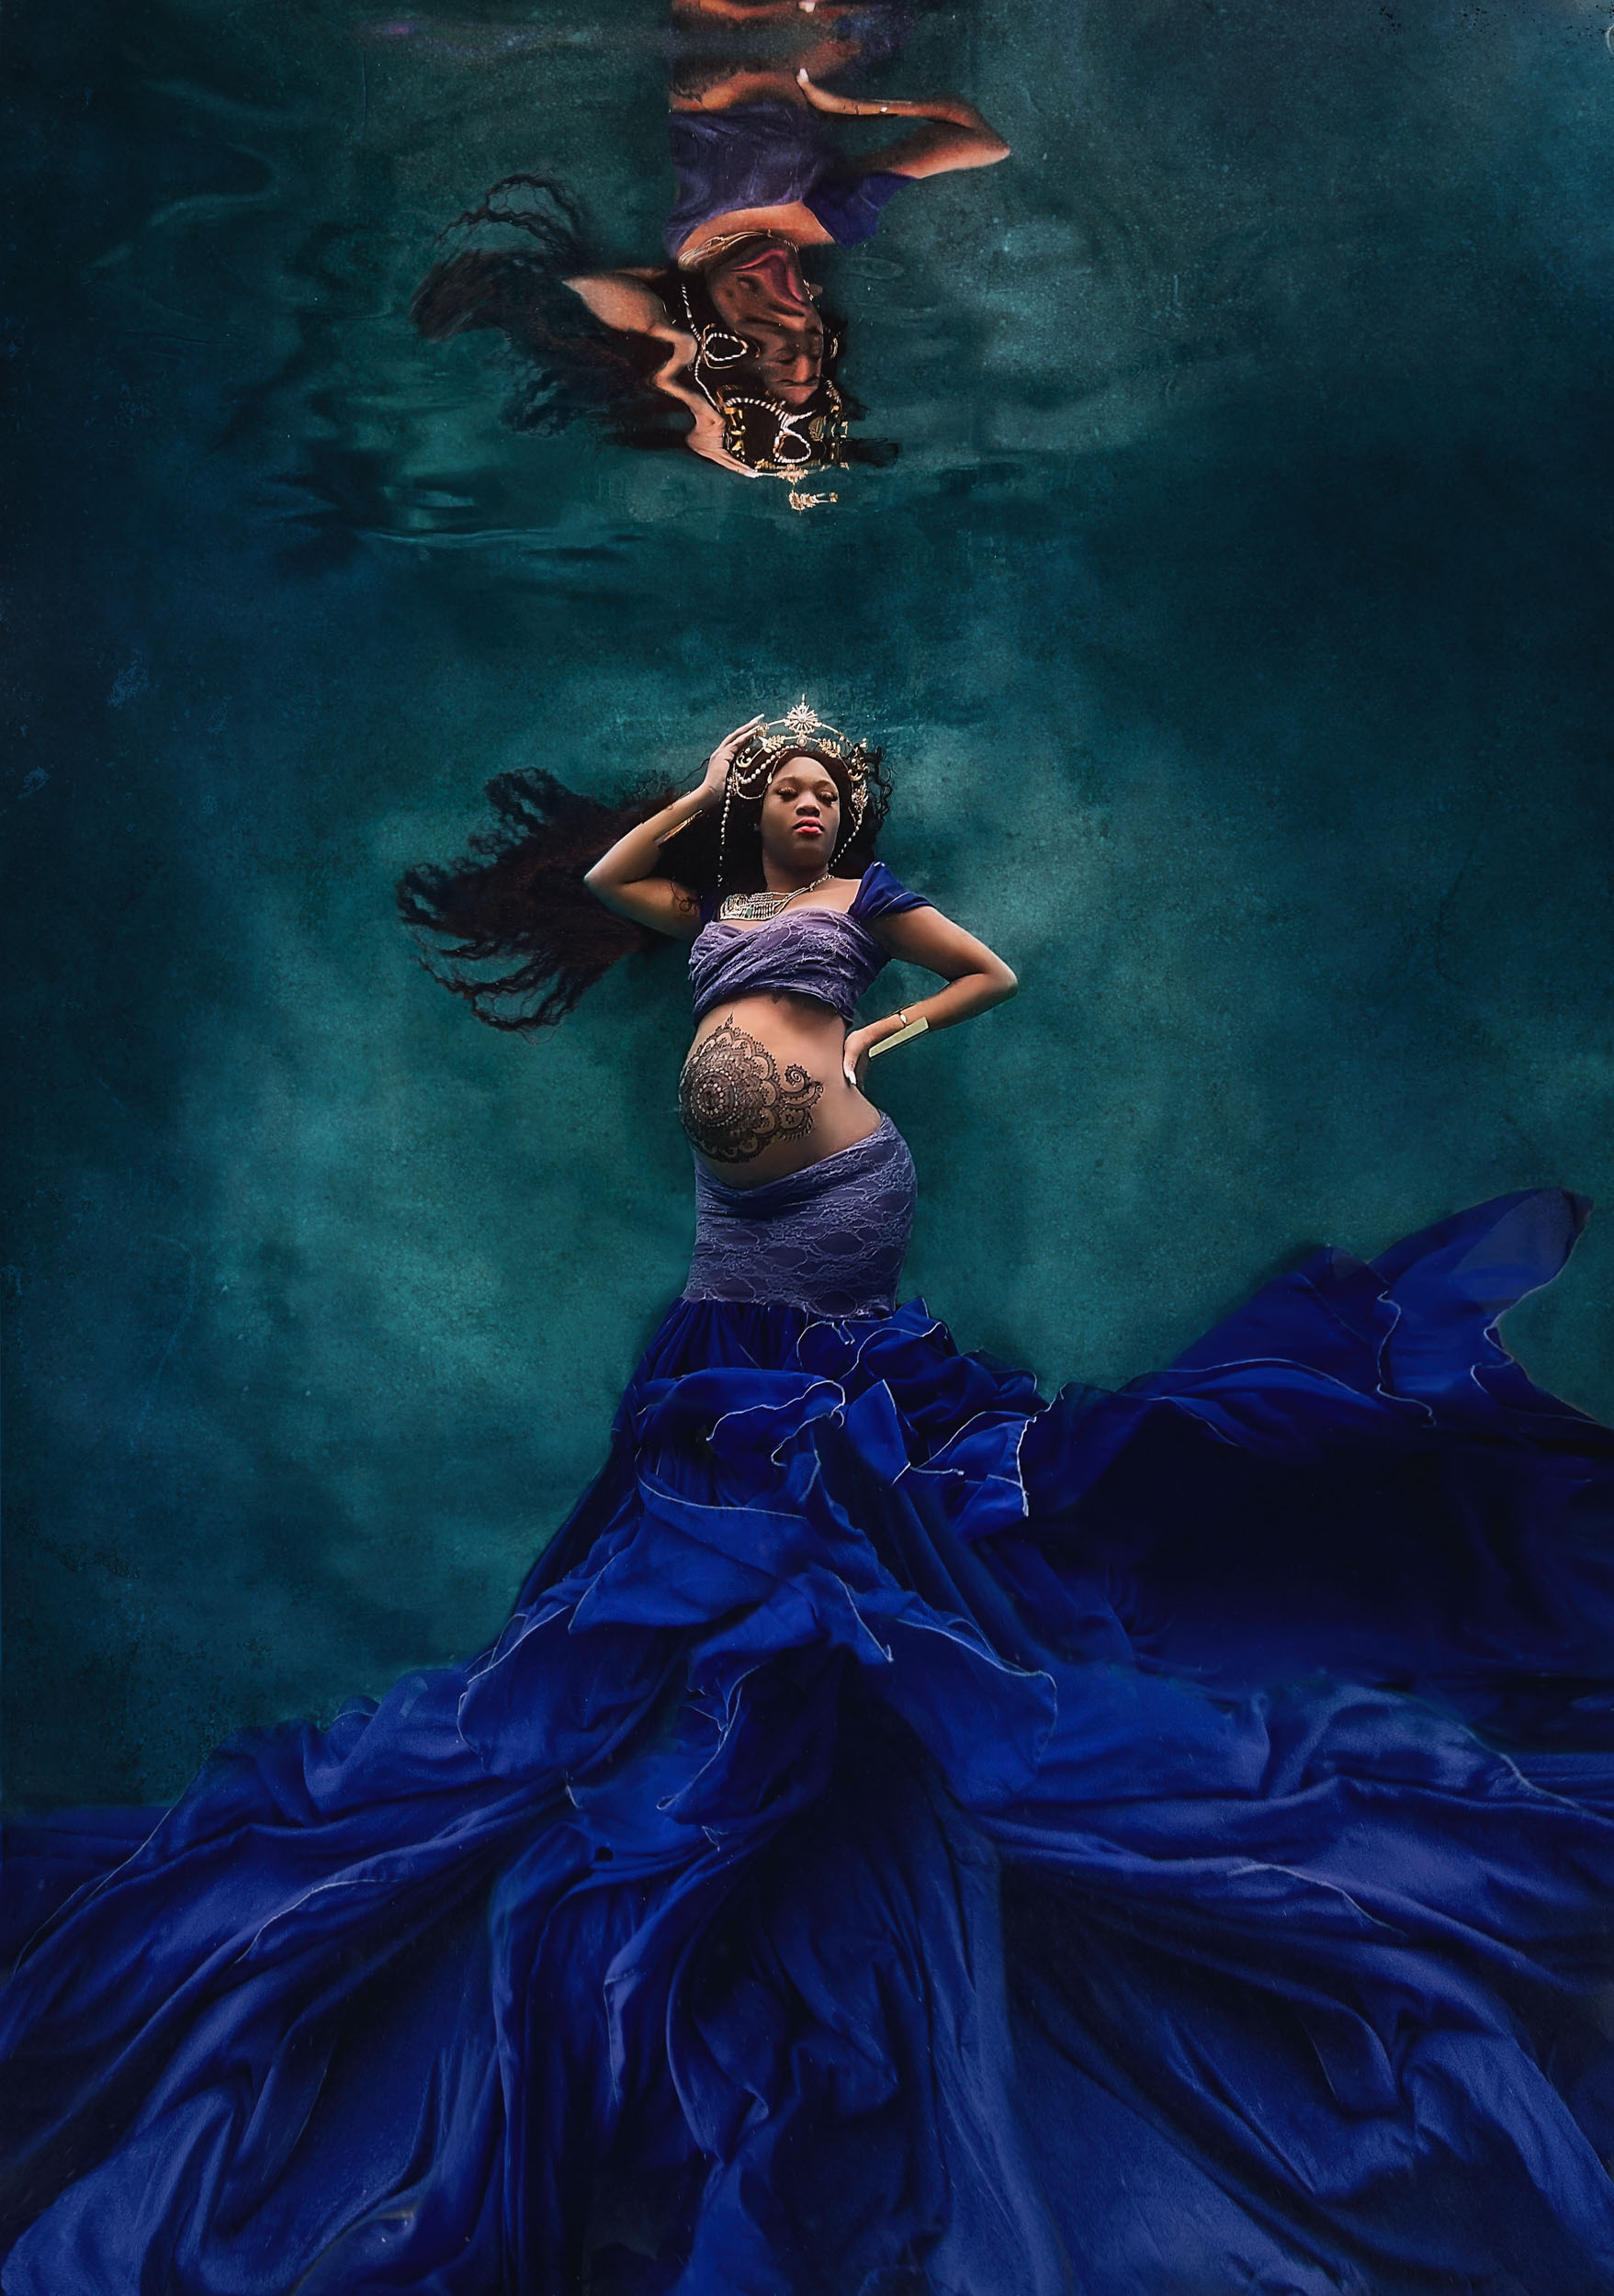 Underwater Maternity